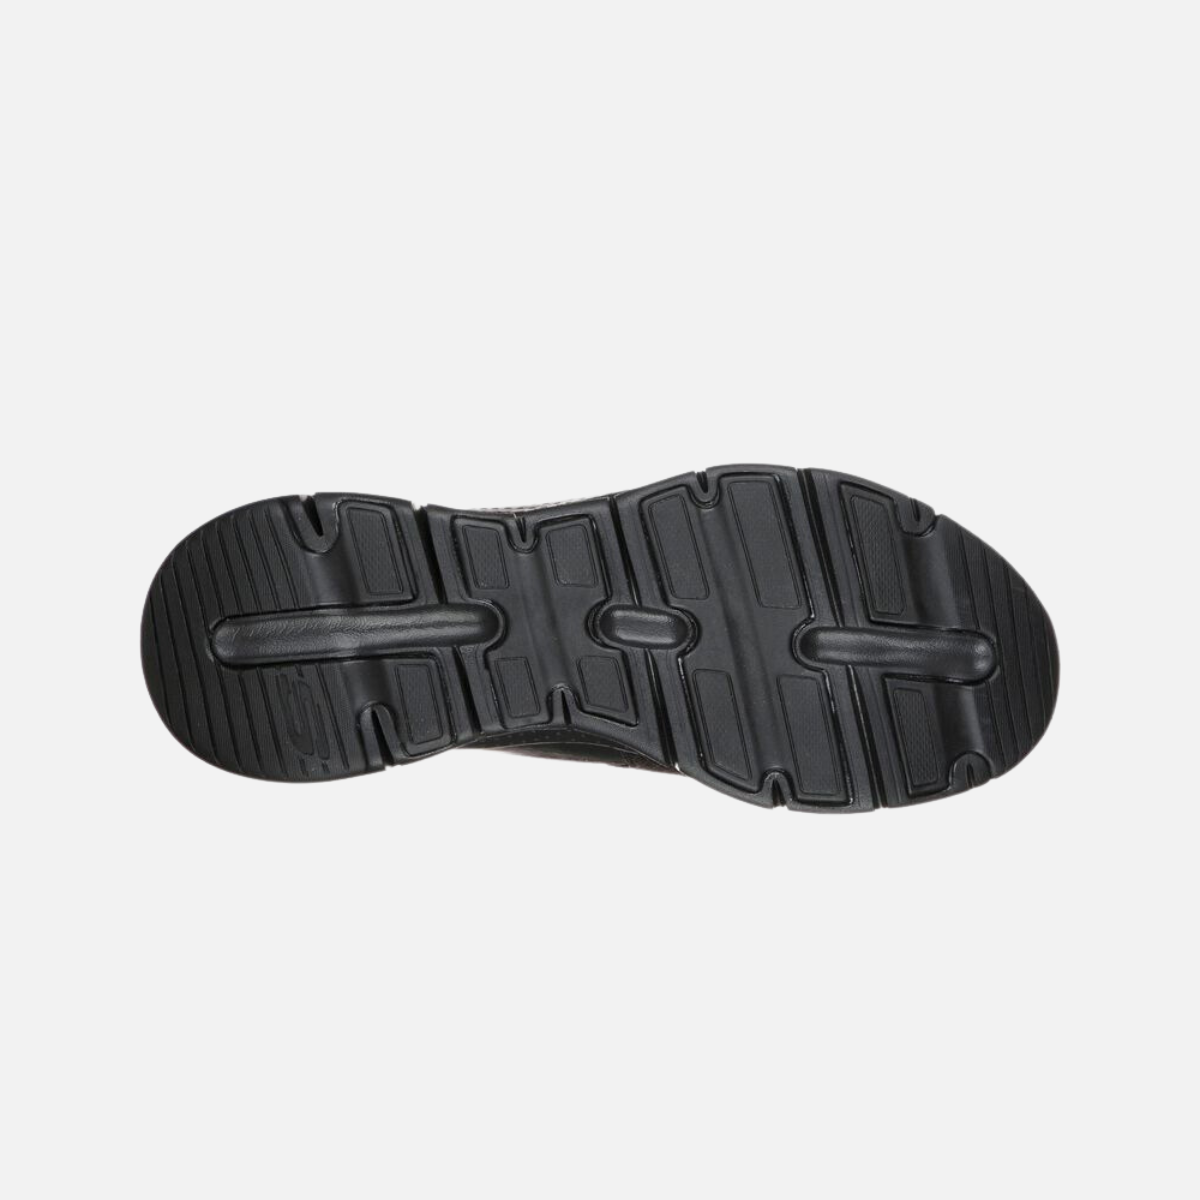 Skechers Arch Fit-Banlin Men's Walking Shoes -Black